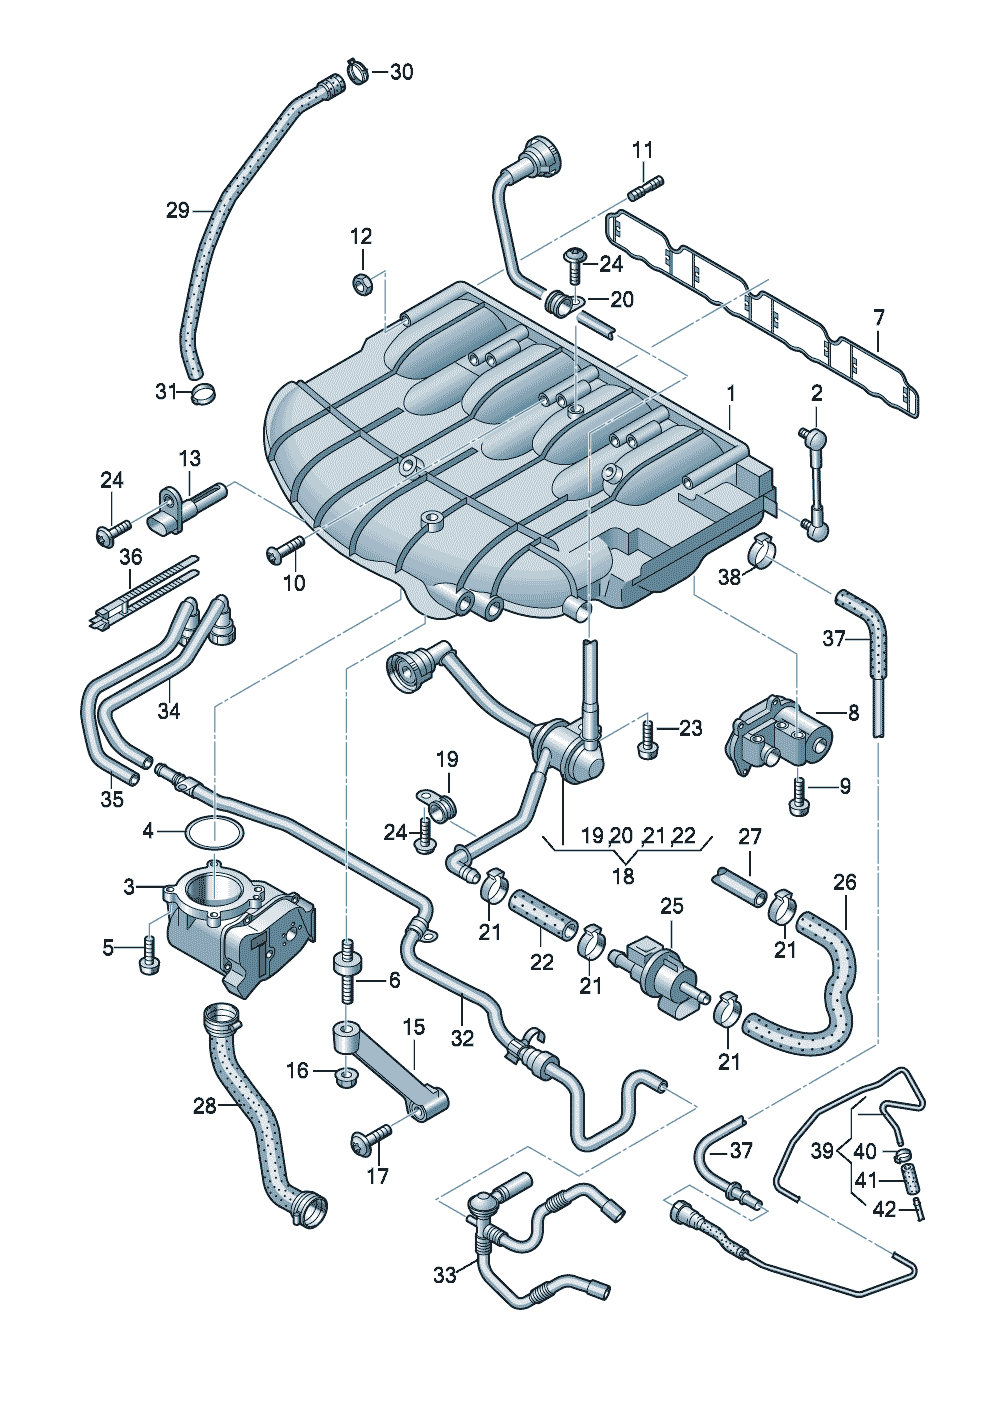 intake systemvacuum system 2.0 Ltr. - Audi TT/TTS Coupe/Roadster - att